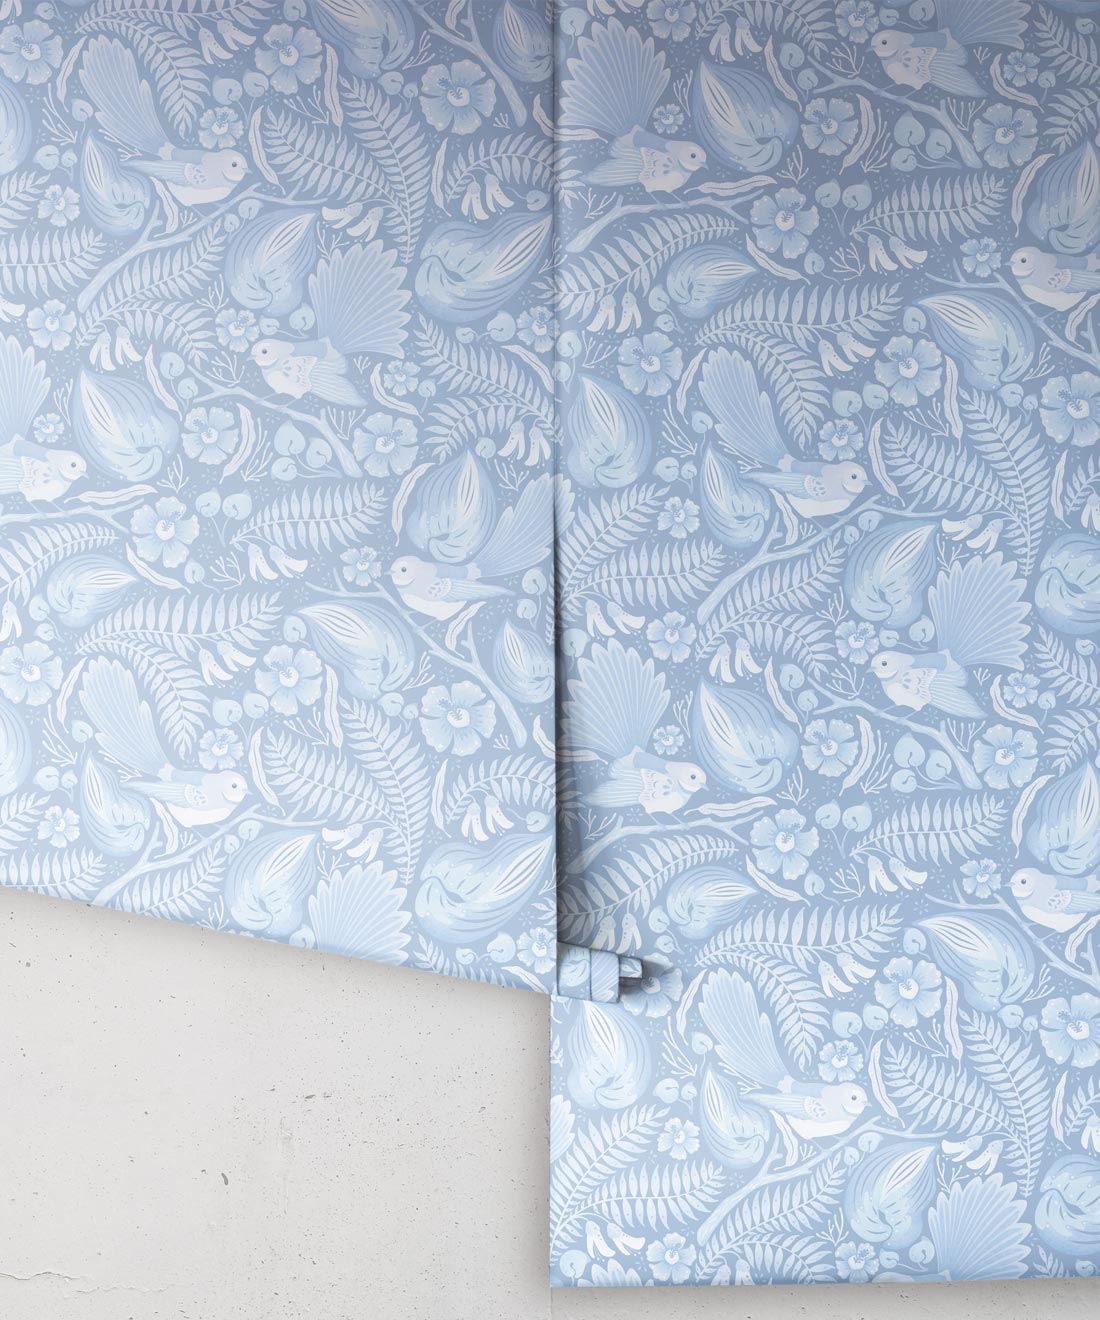 Faintails Wallpaper • New Zealand • Bird Wallpaper • Kowhai Tree • Kowhai Flowers • Light Blue Wallpaper • Ice Colorway • Wallpaper Drops